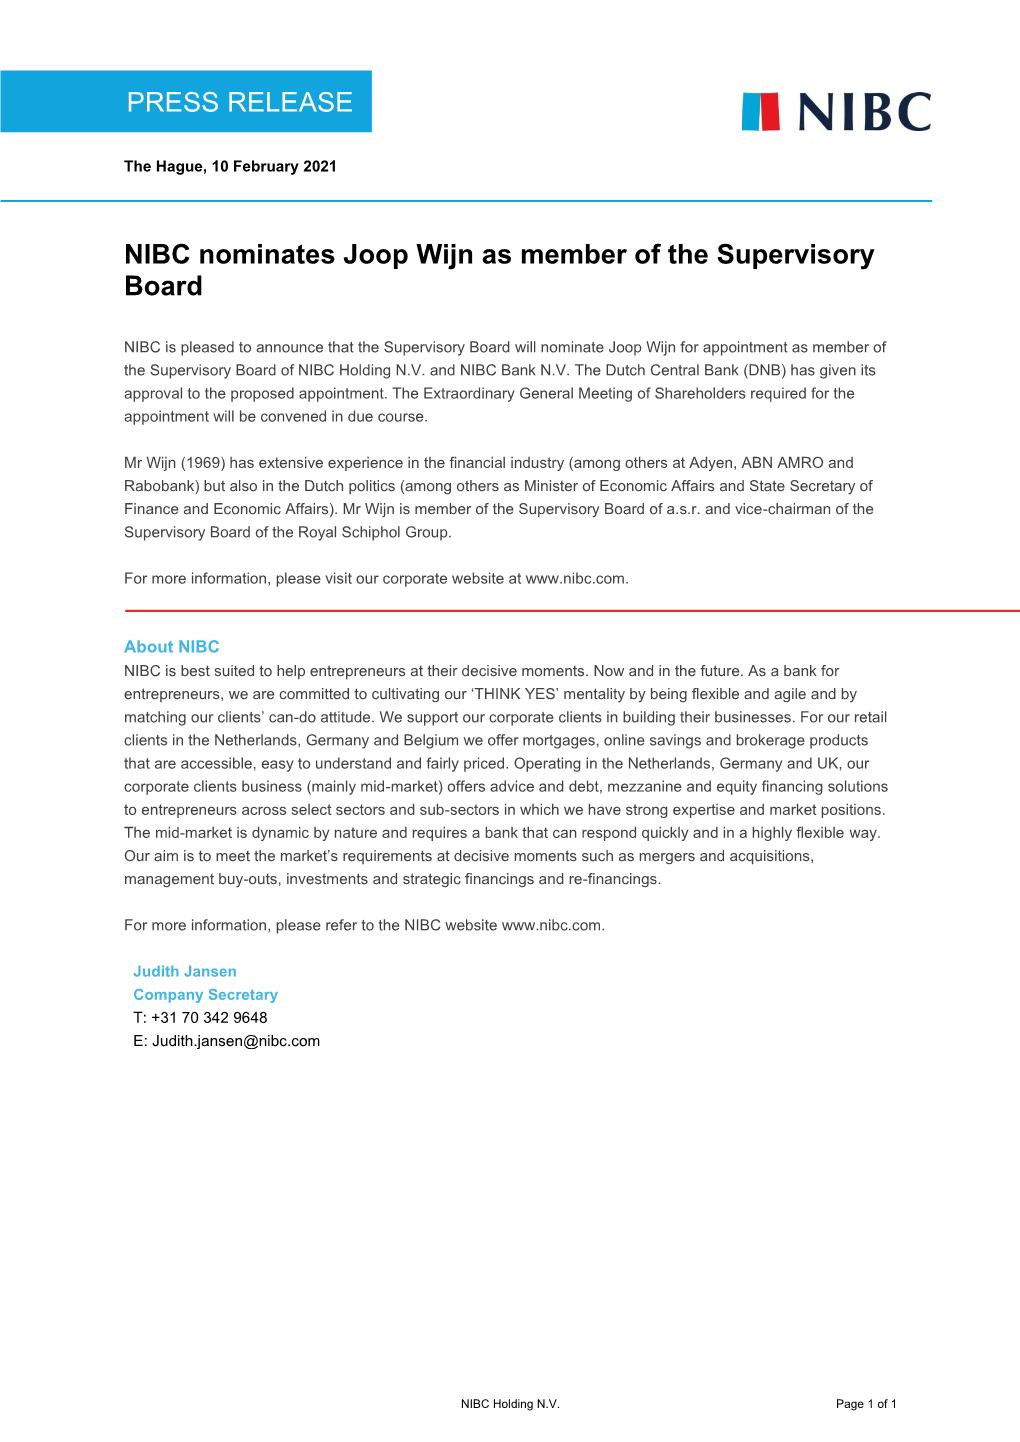 NIBC Nominates Joop Wijn As Member of the Supervisory Board